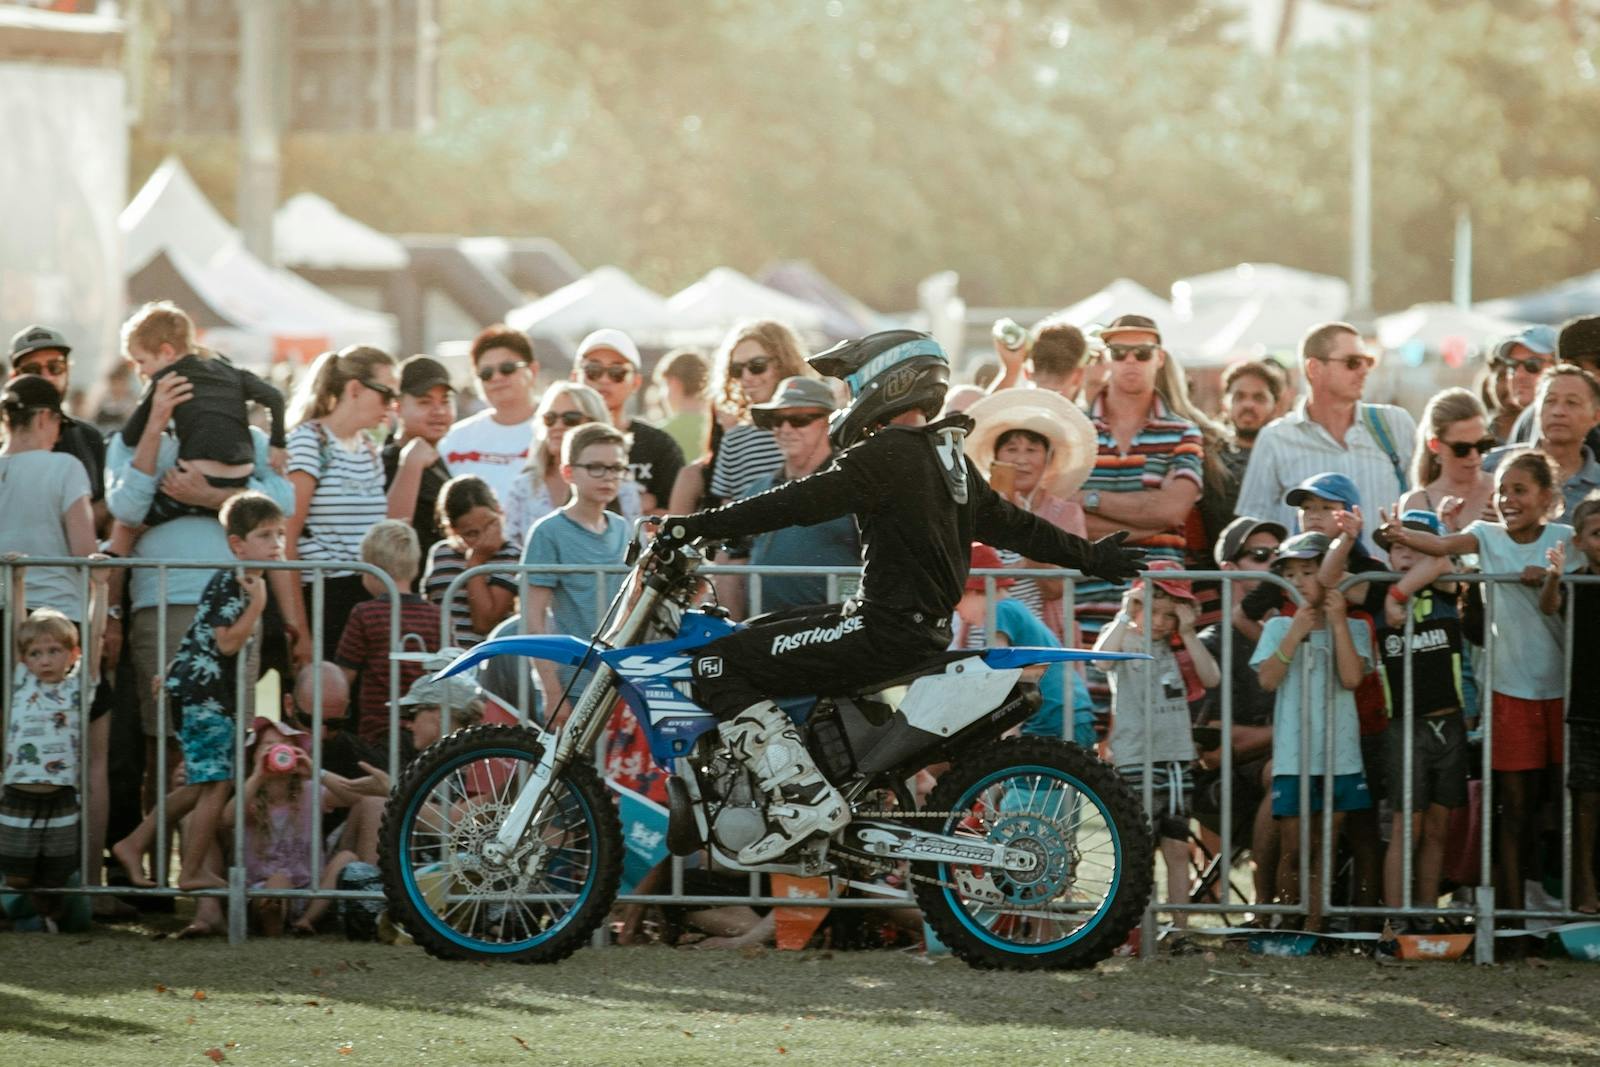 York Motorcycle Festival